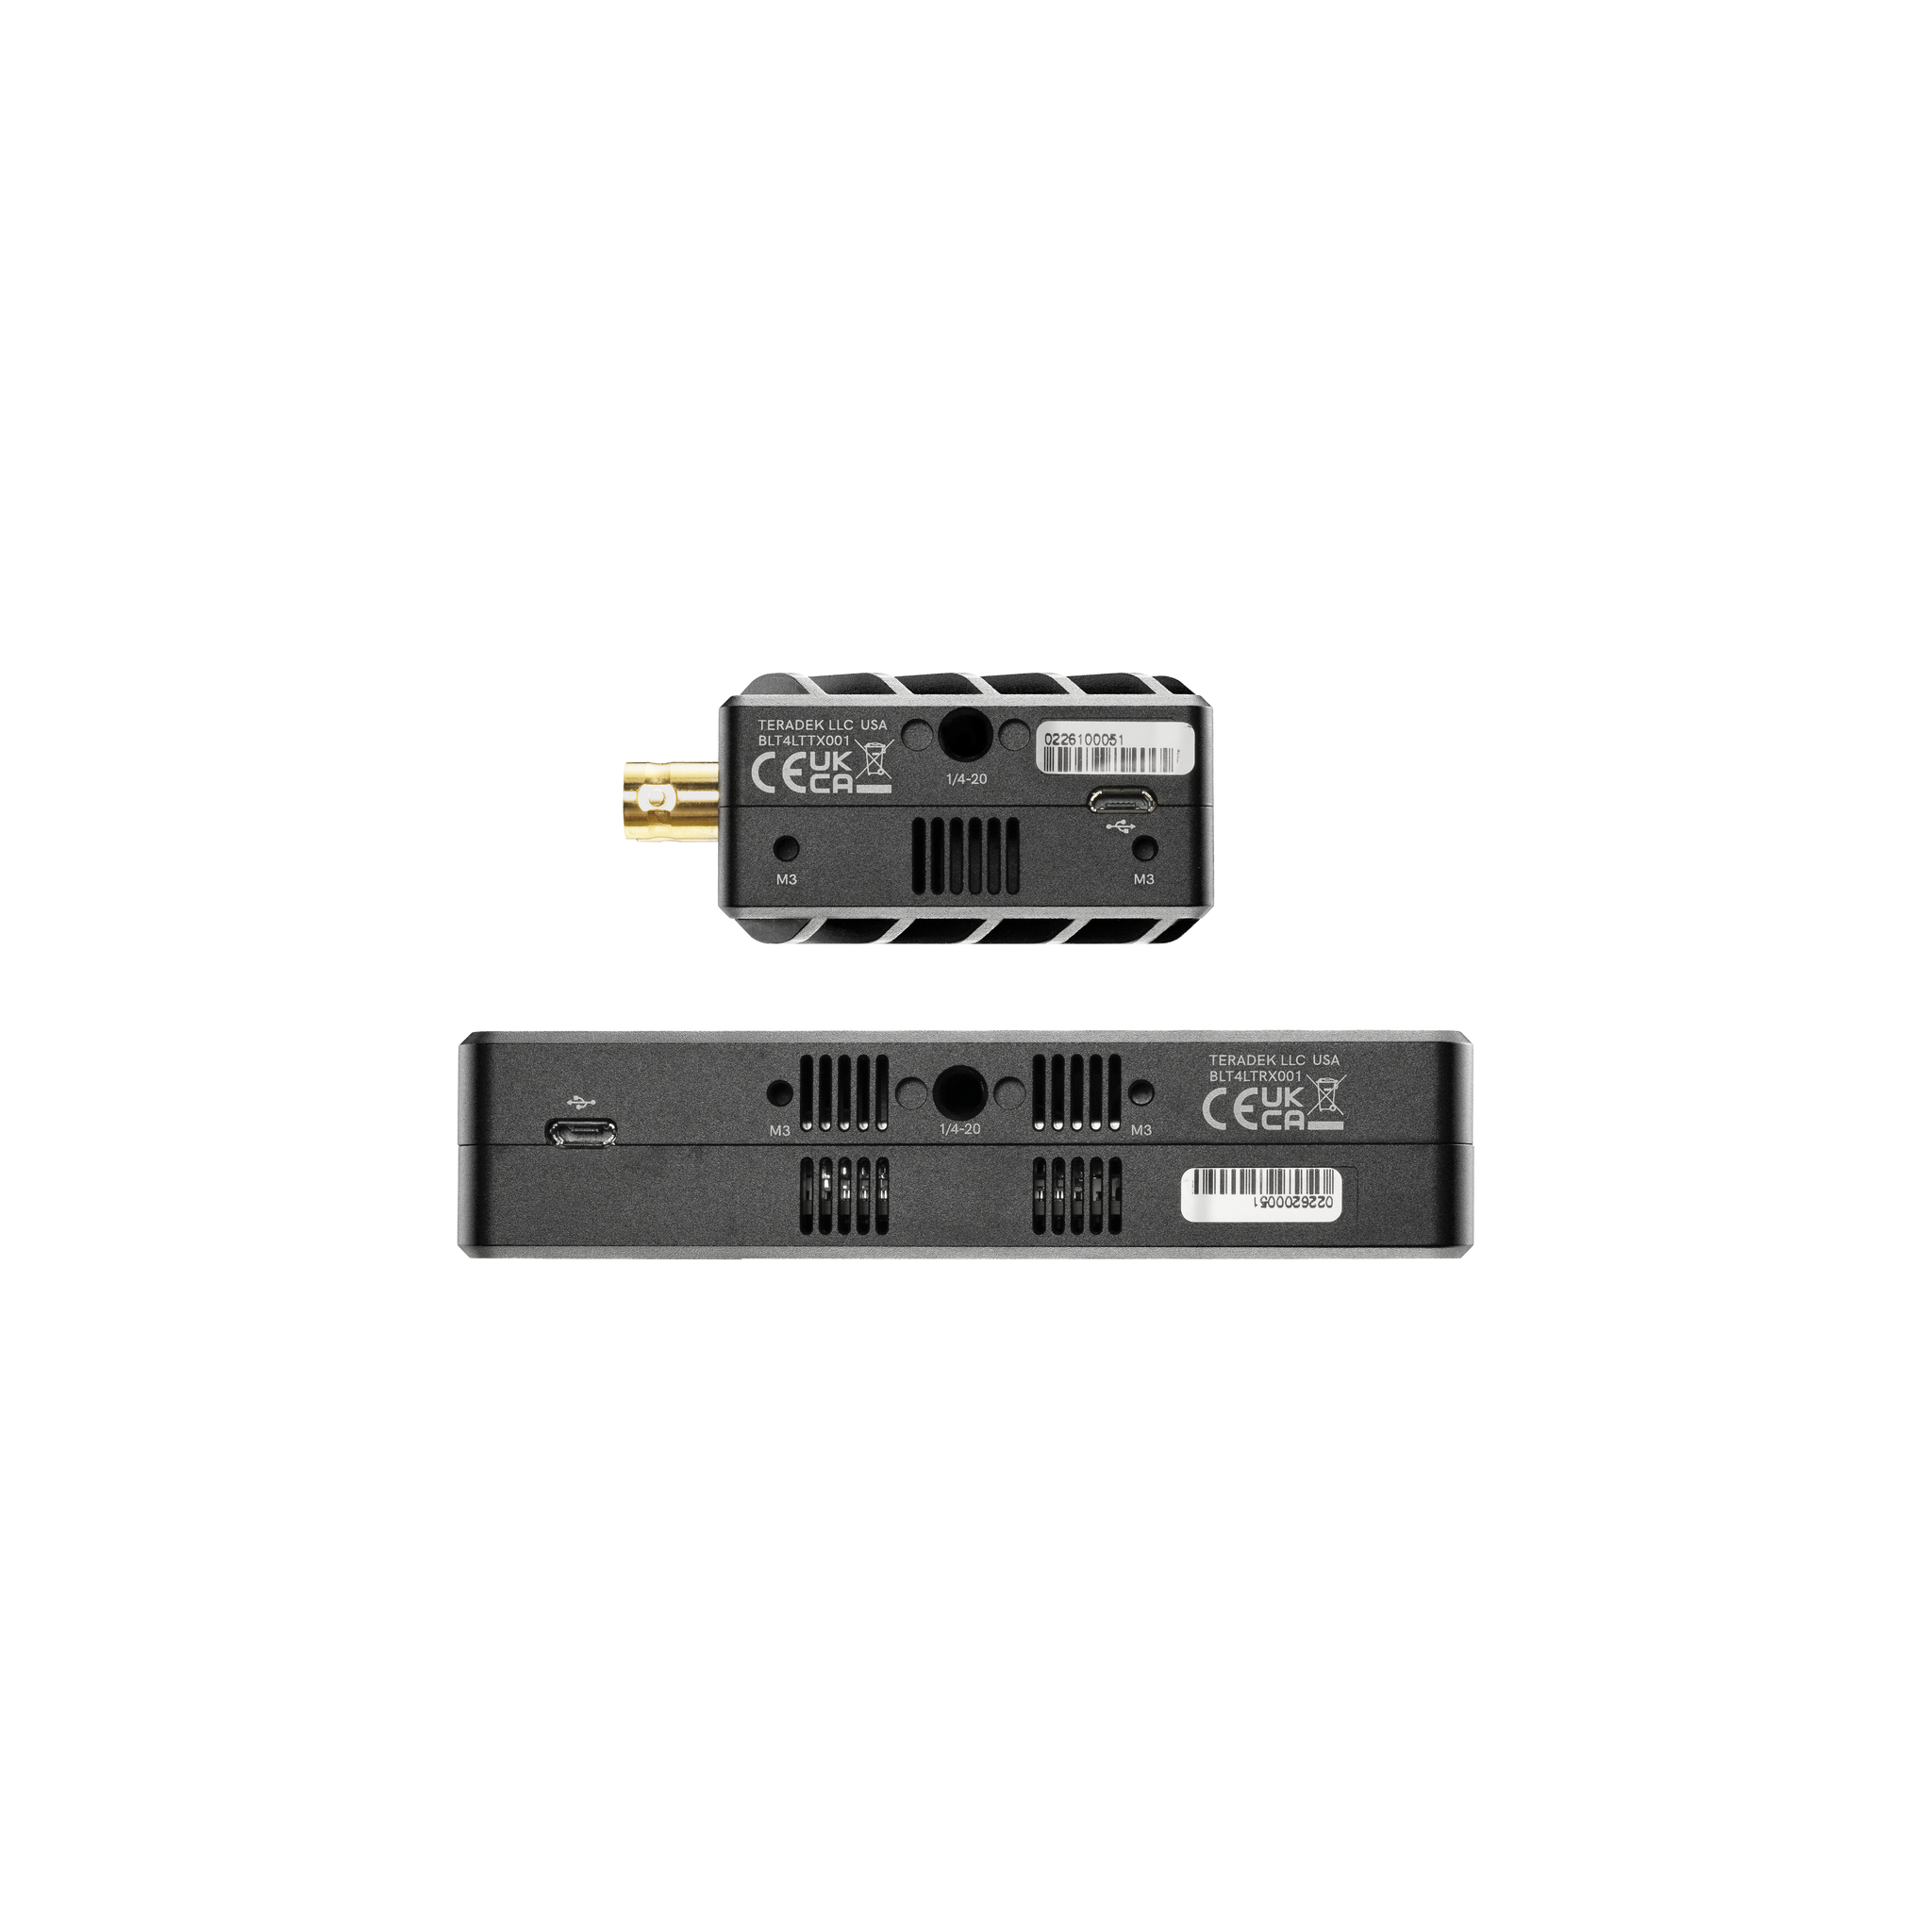 Comprar Teradek Bolt 6 LT 1500 TX - Transmisor 3G-SDI/HDMI Inalambrico al  mejor precio - Provideo